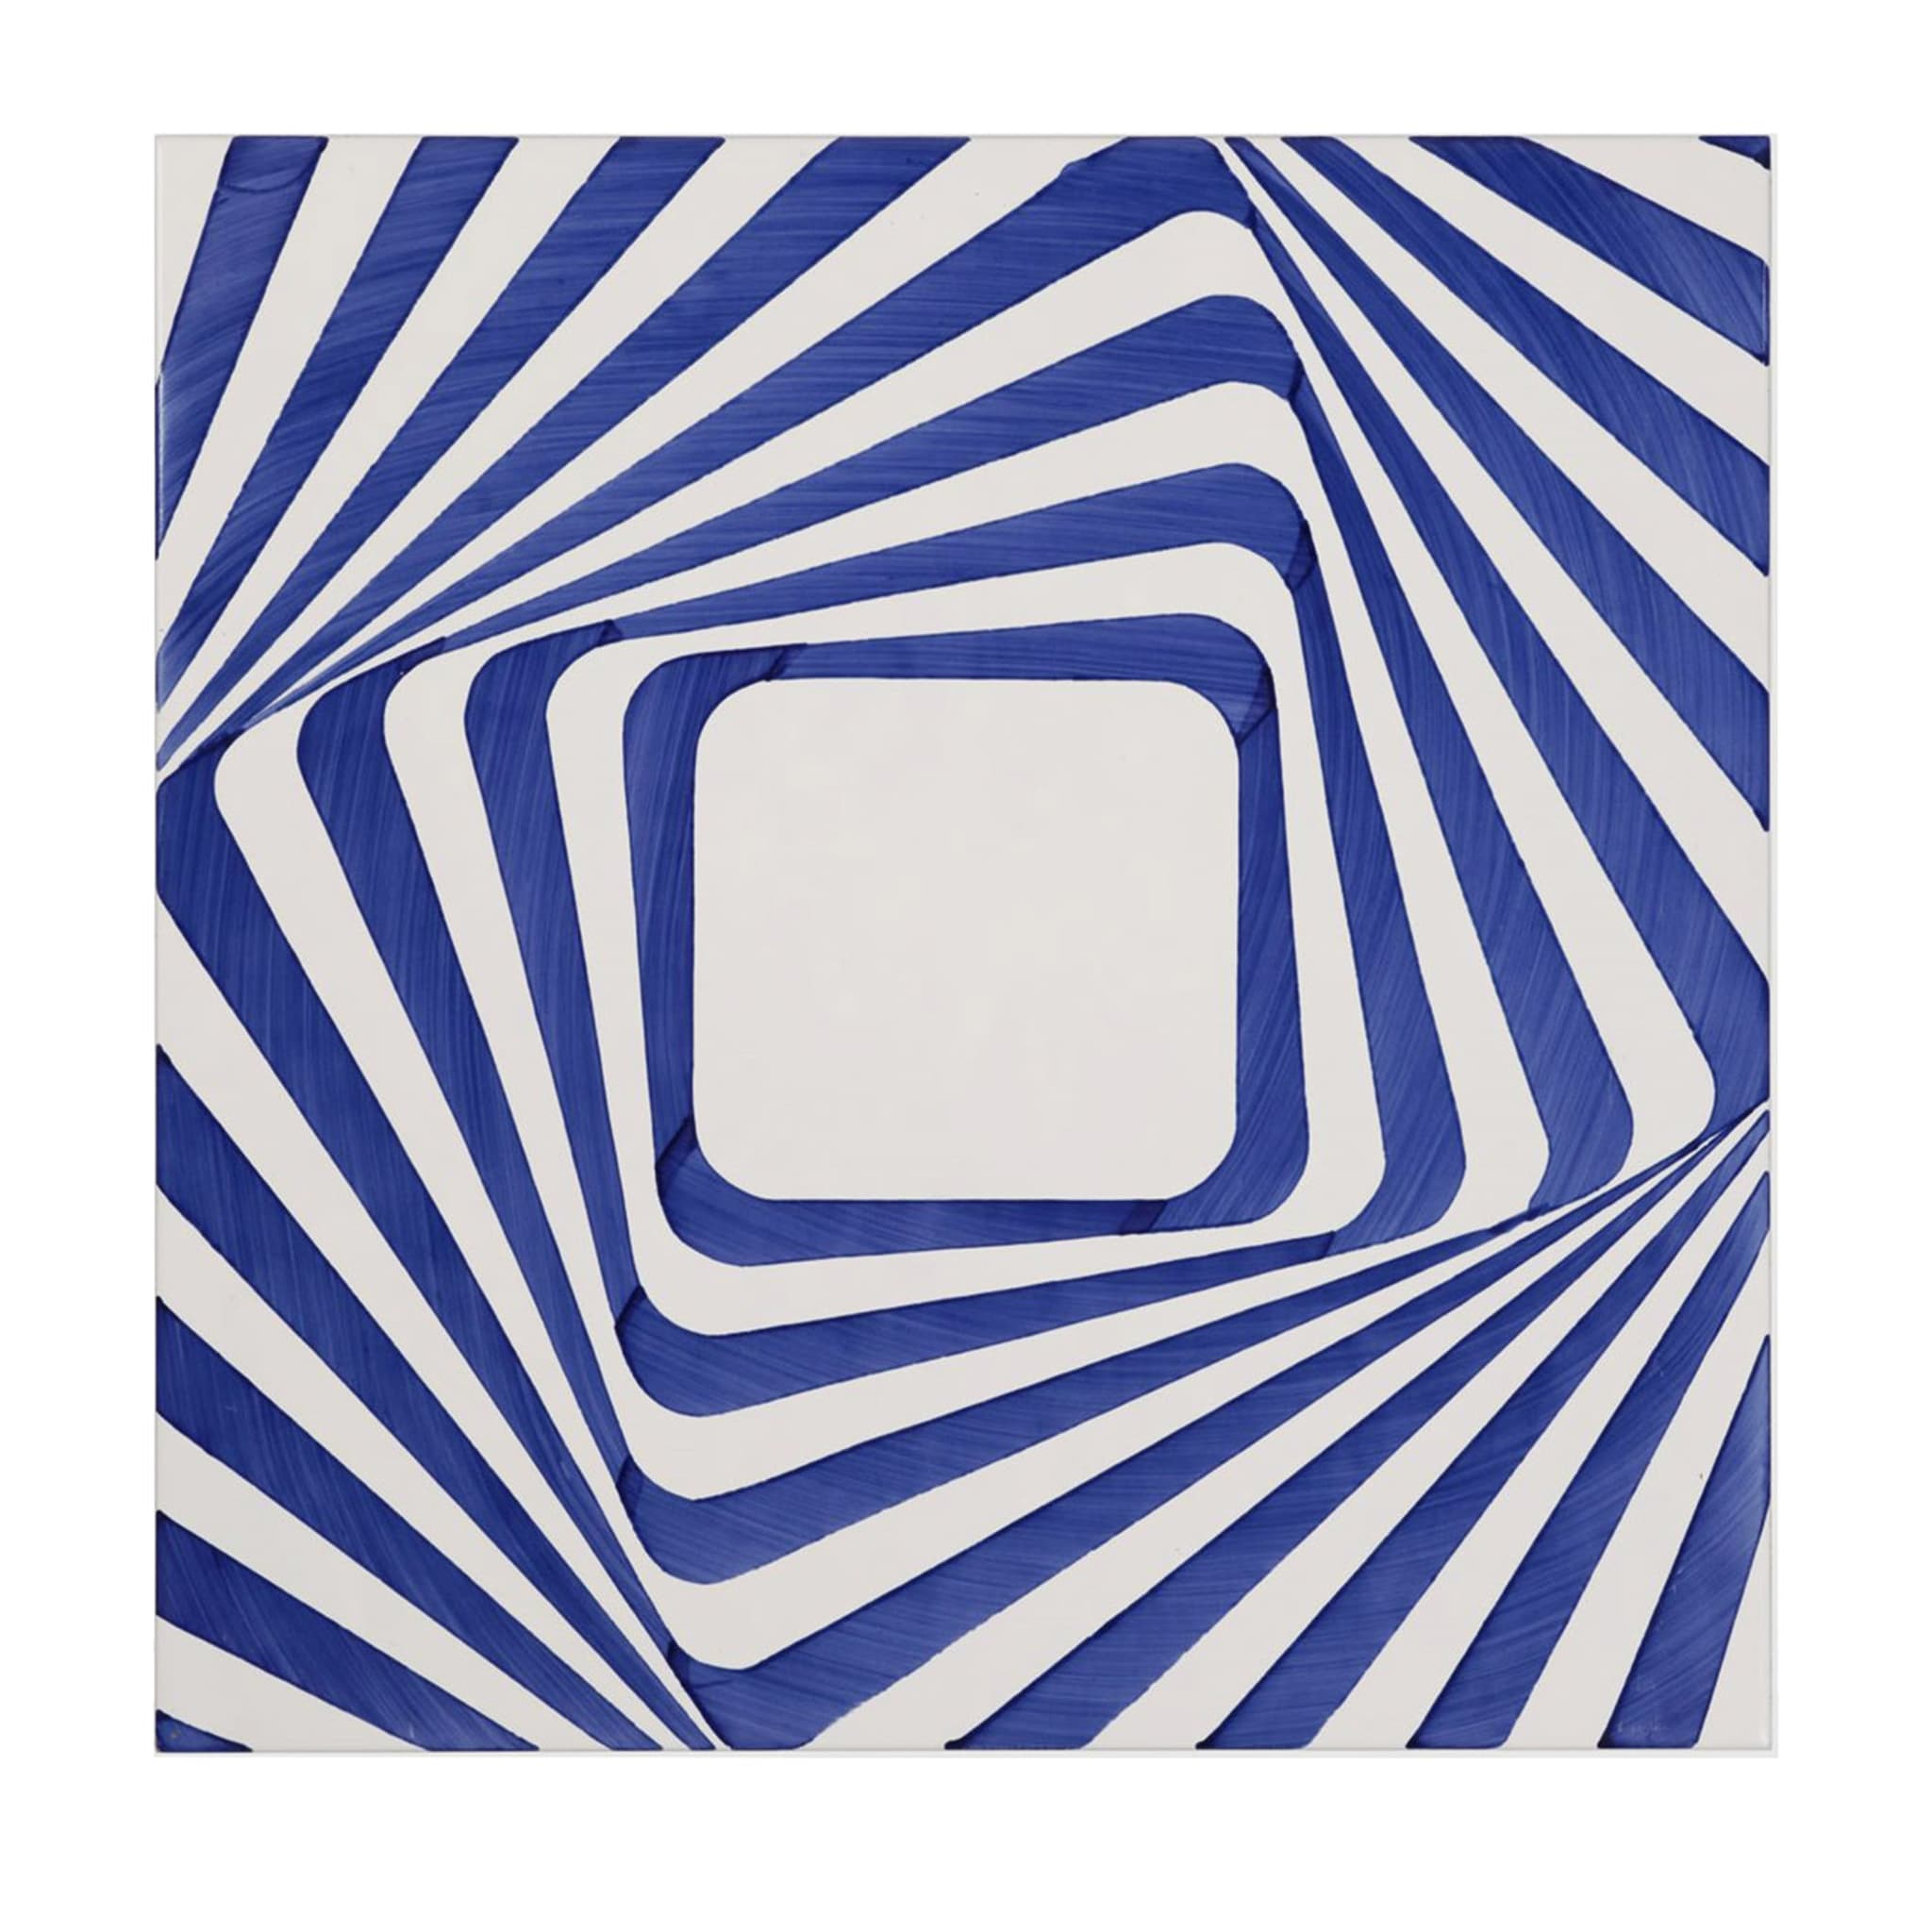 Geobard Riquadri Set of 4 Blue & White Tiles #1 - Main view